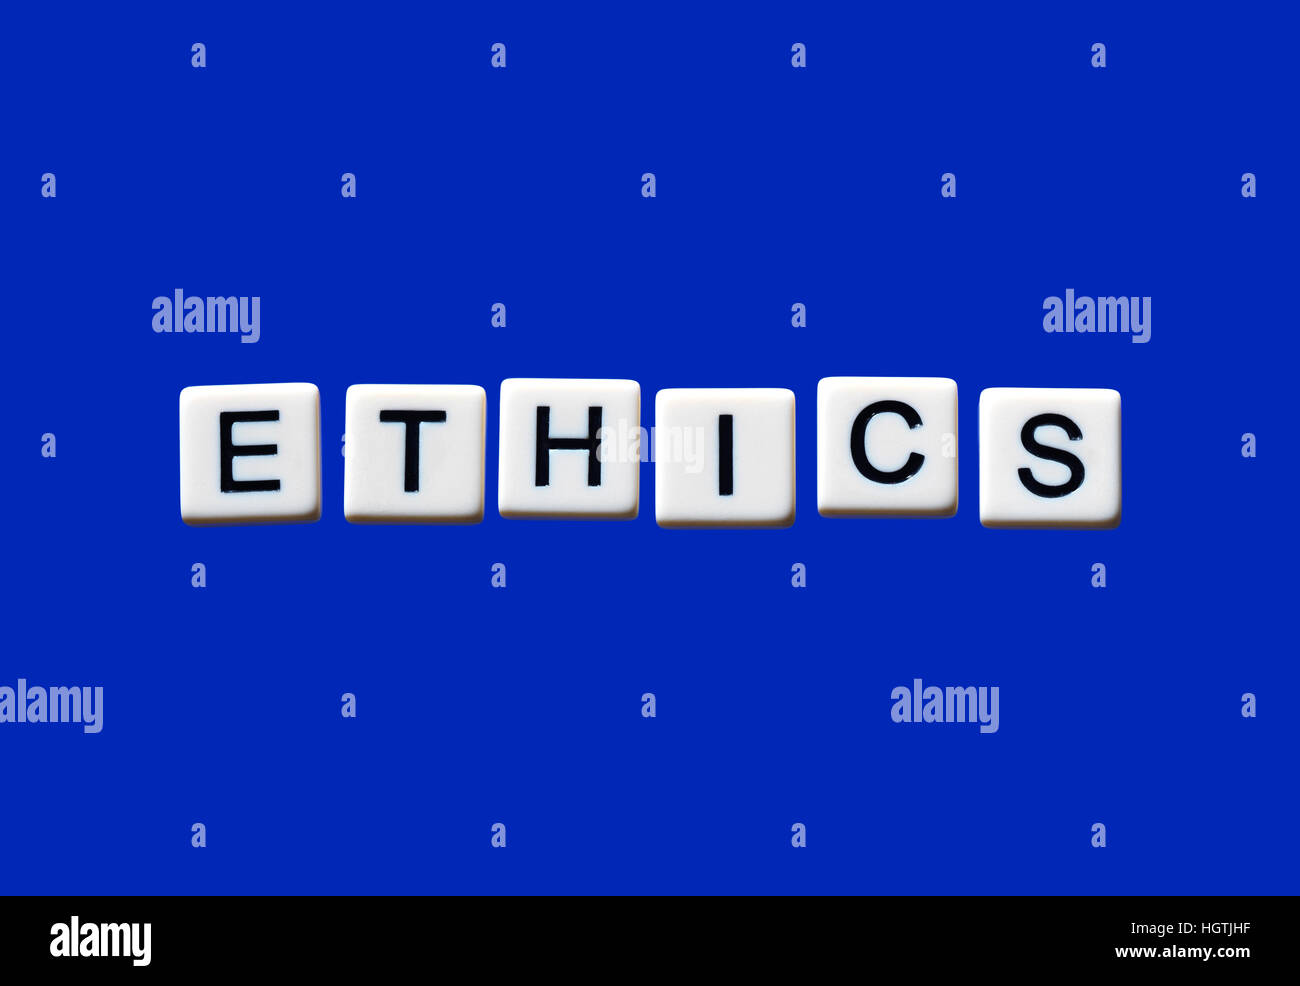 Ethics highlighted on white blocks Stock Photo